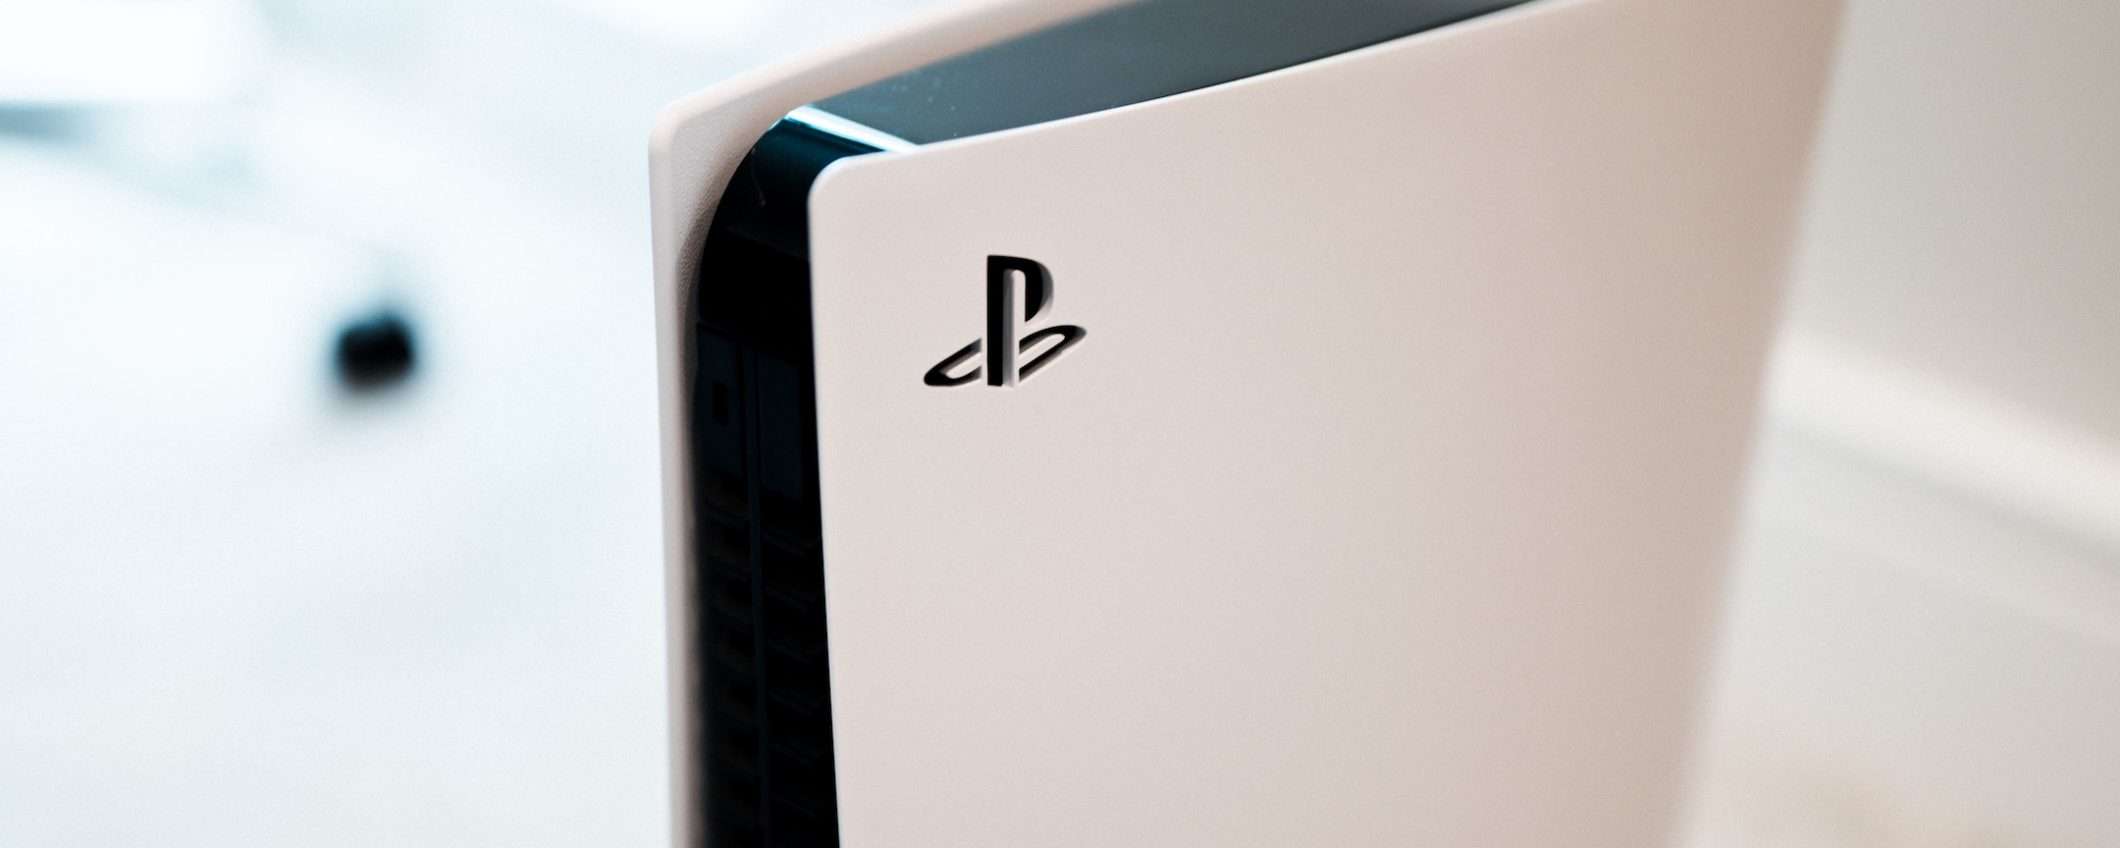 PlayStation 5: scovati due exploit, è allarme jailbreak